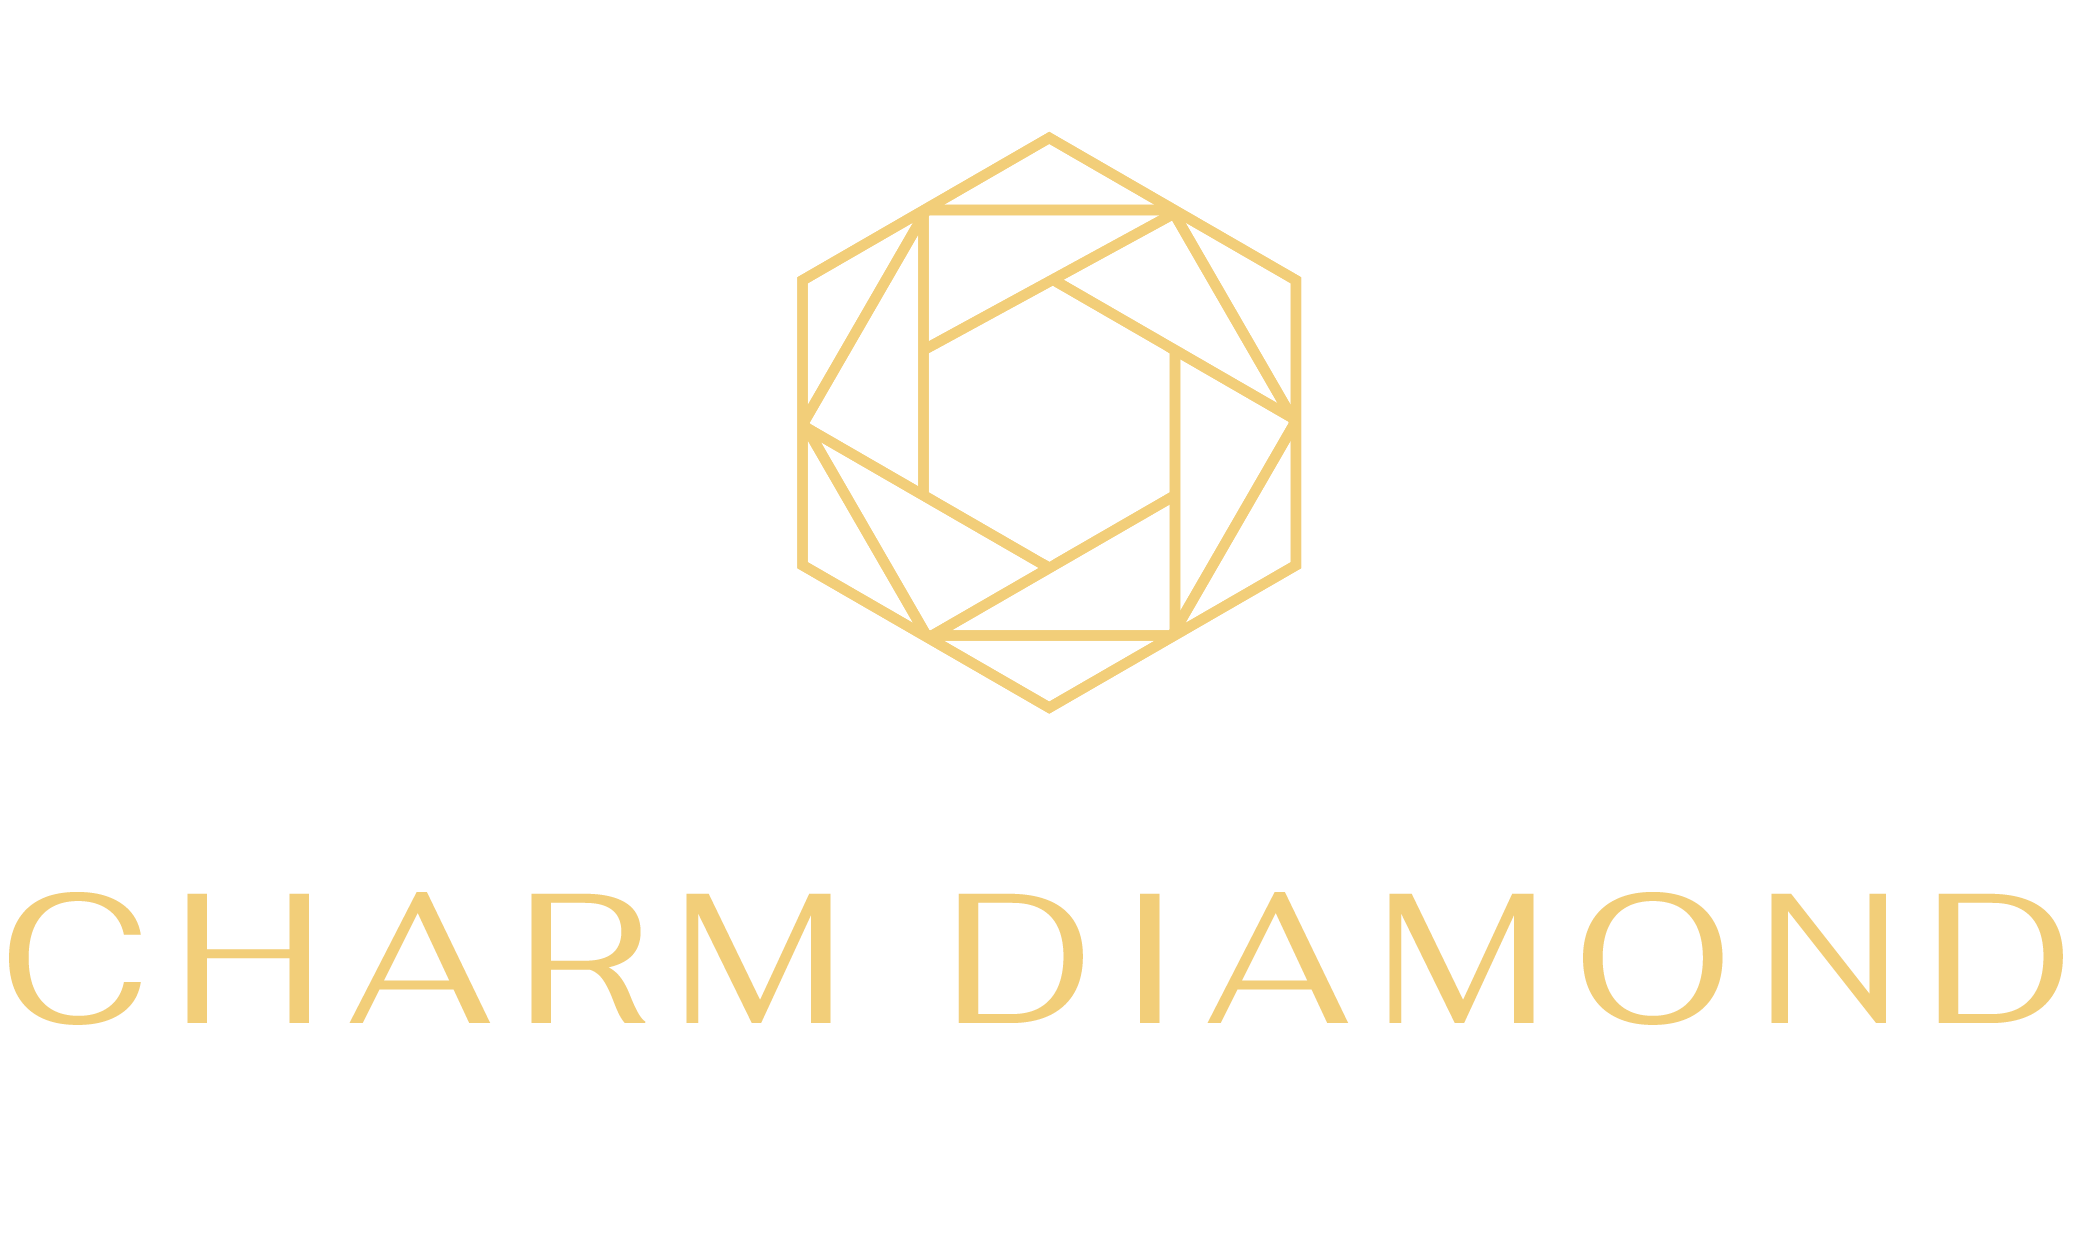 CHARM DIAMOND